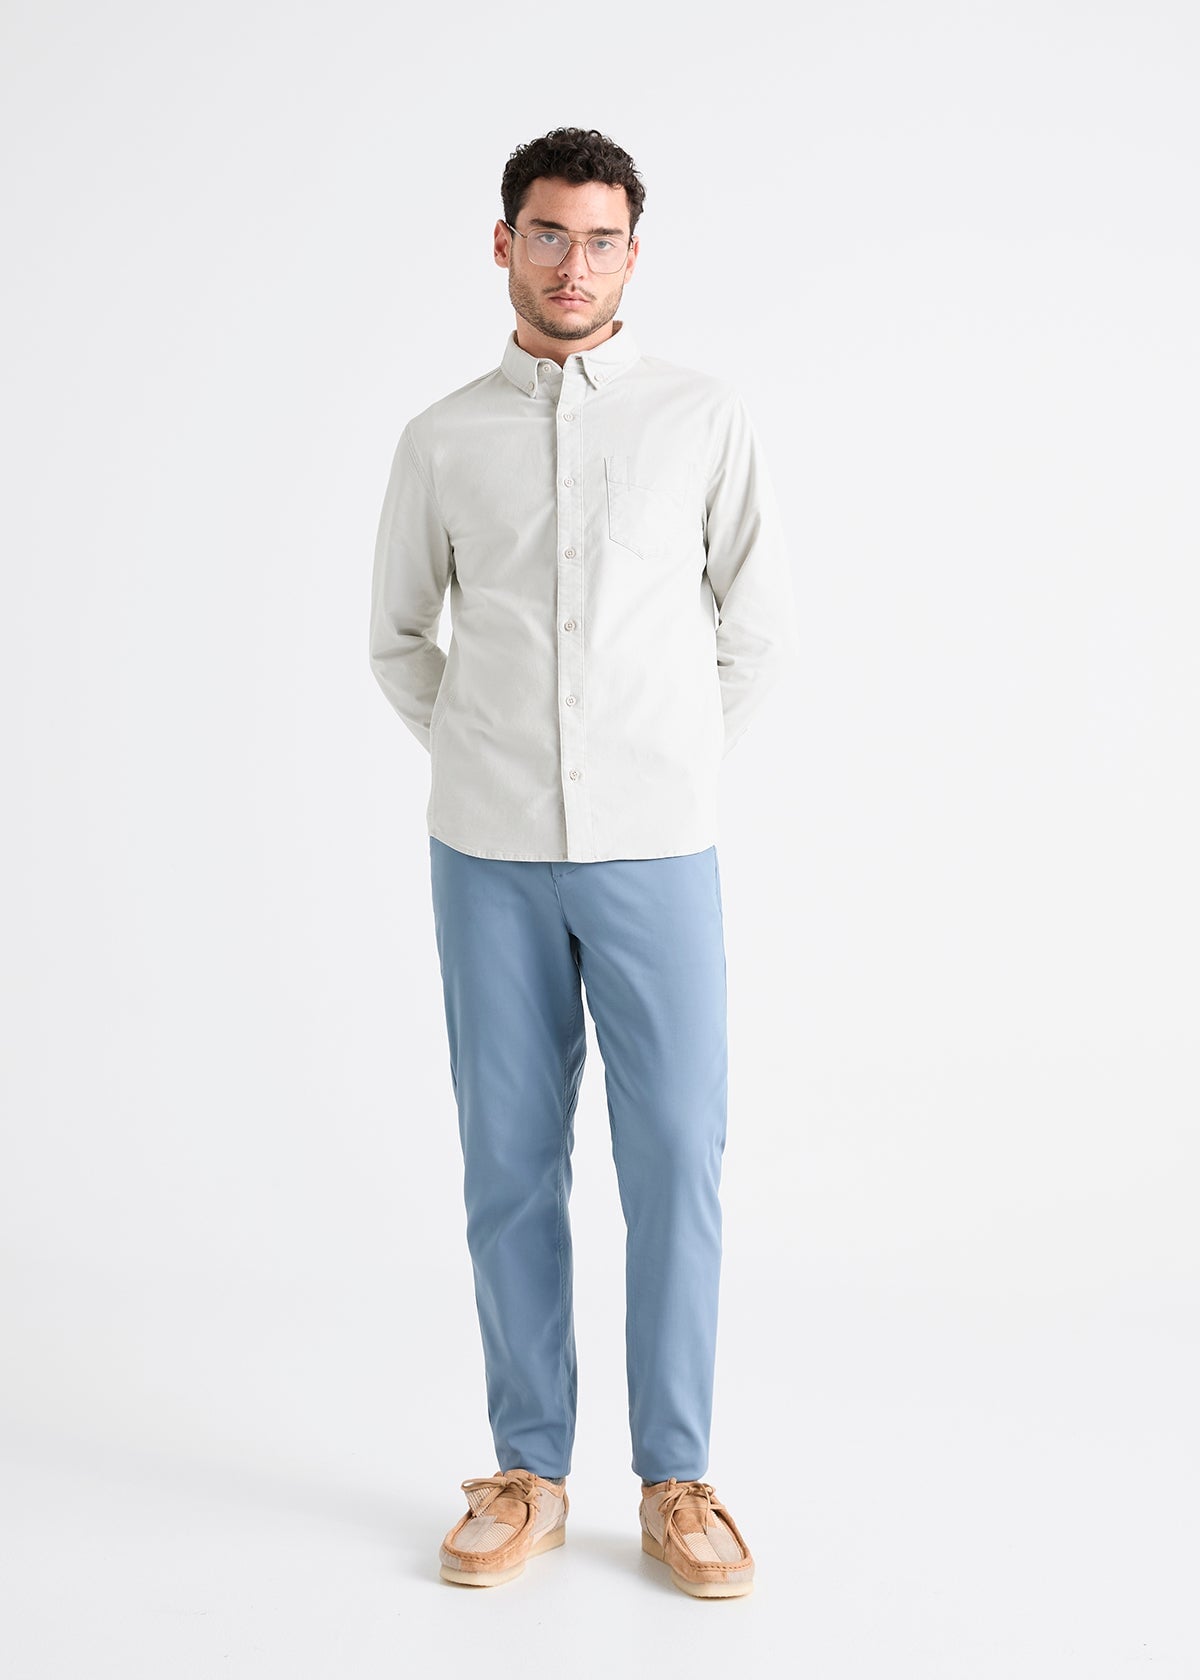 Lewis Jackson - Golfer & Social Media Guru Shares His Style - Men Style  Fashion | Light blue shirts, Grey pants outfit, Blue oxford shirt